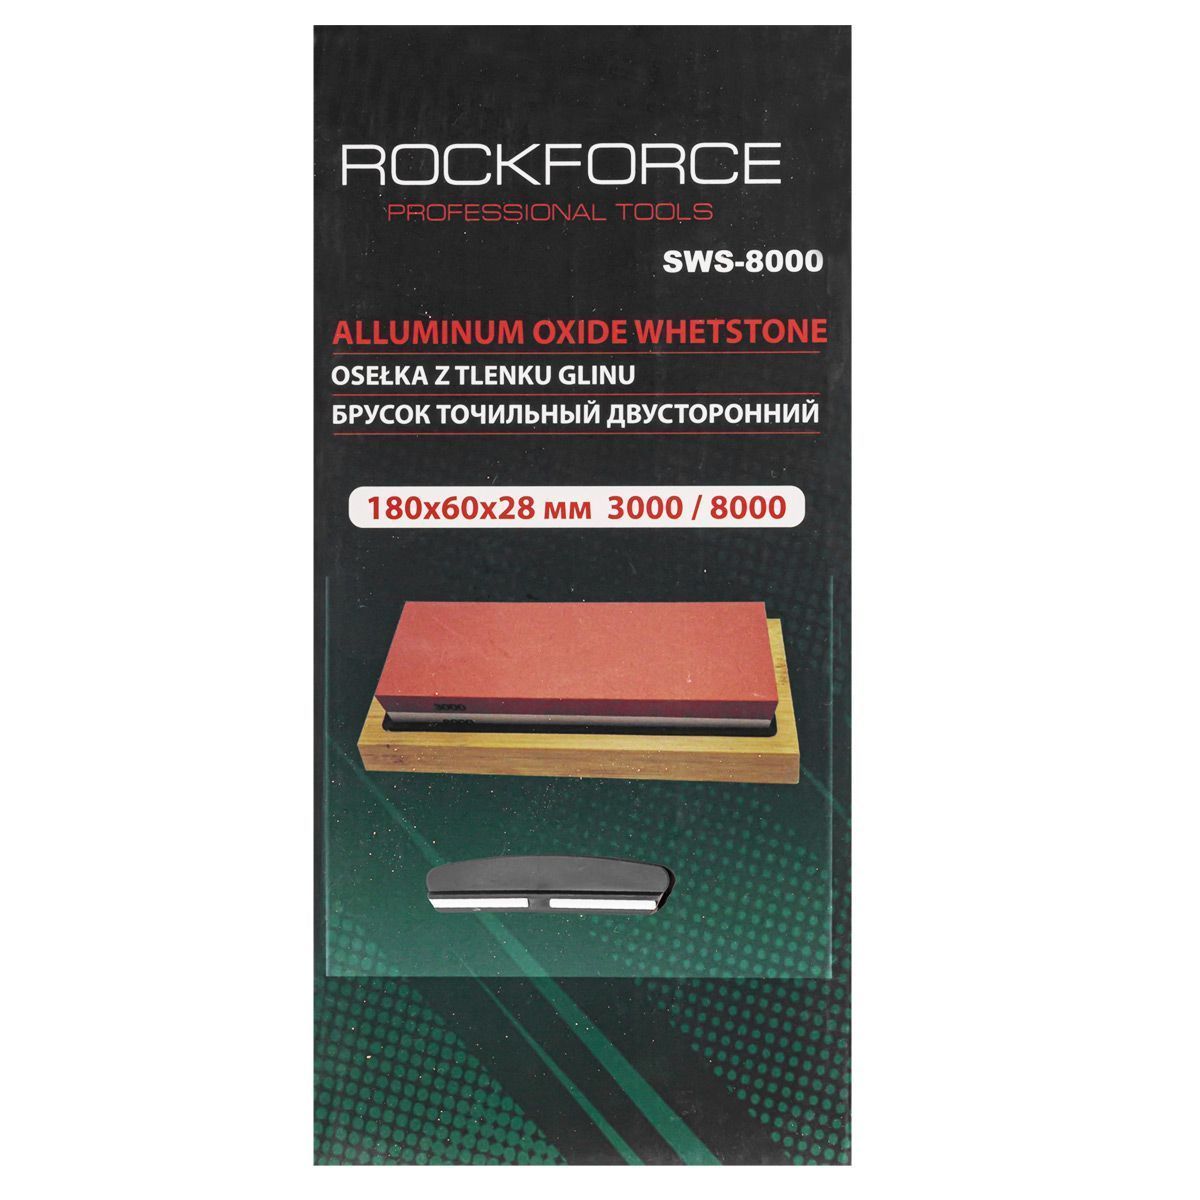 Брусок точильный двусторонний 180x60x28mm 3000/8000  Rock FORCE RF-SWS-8000